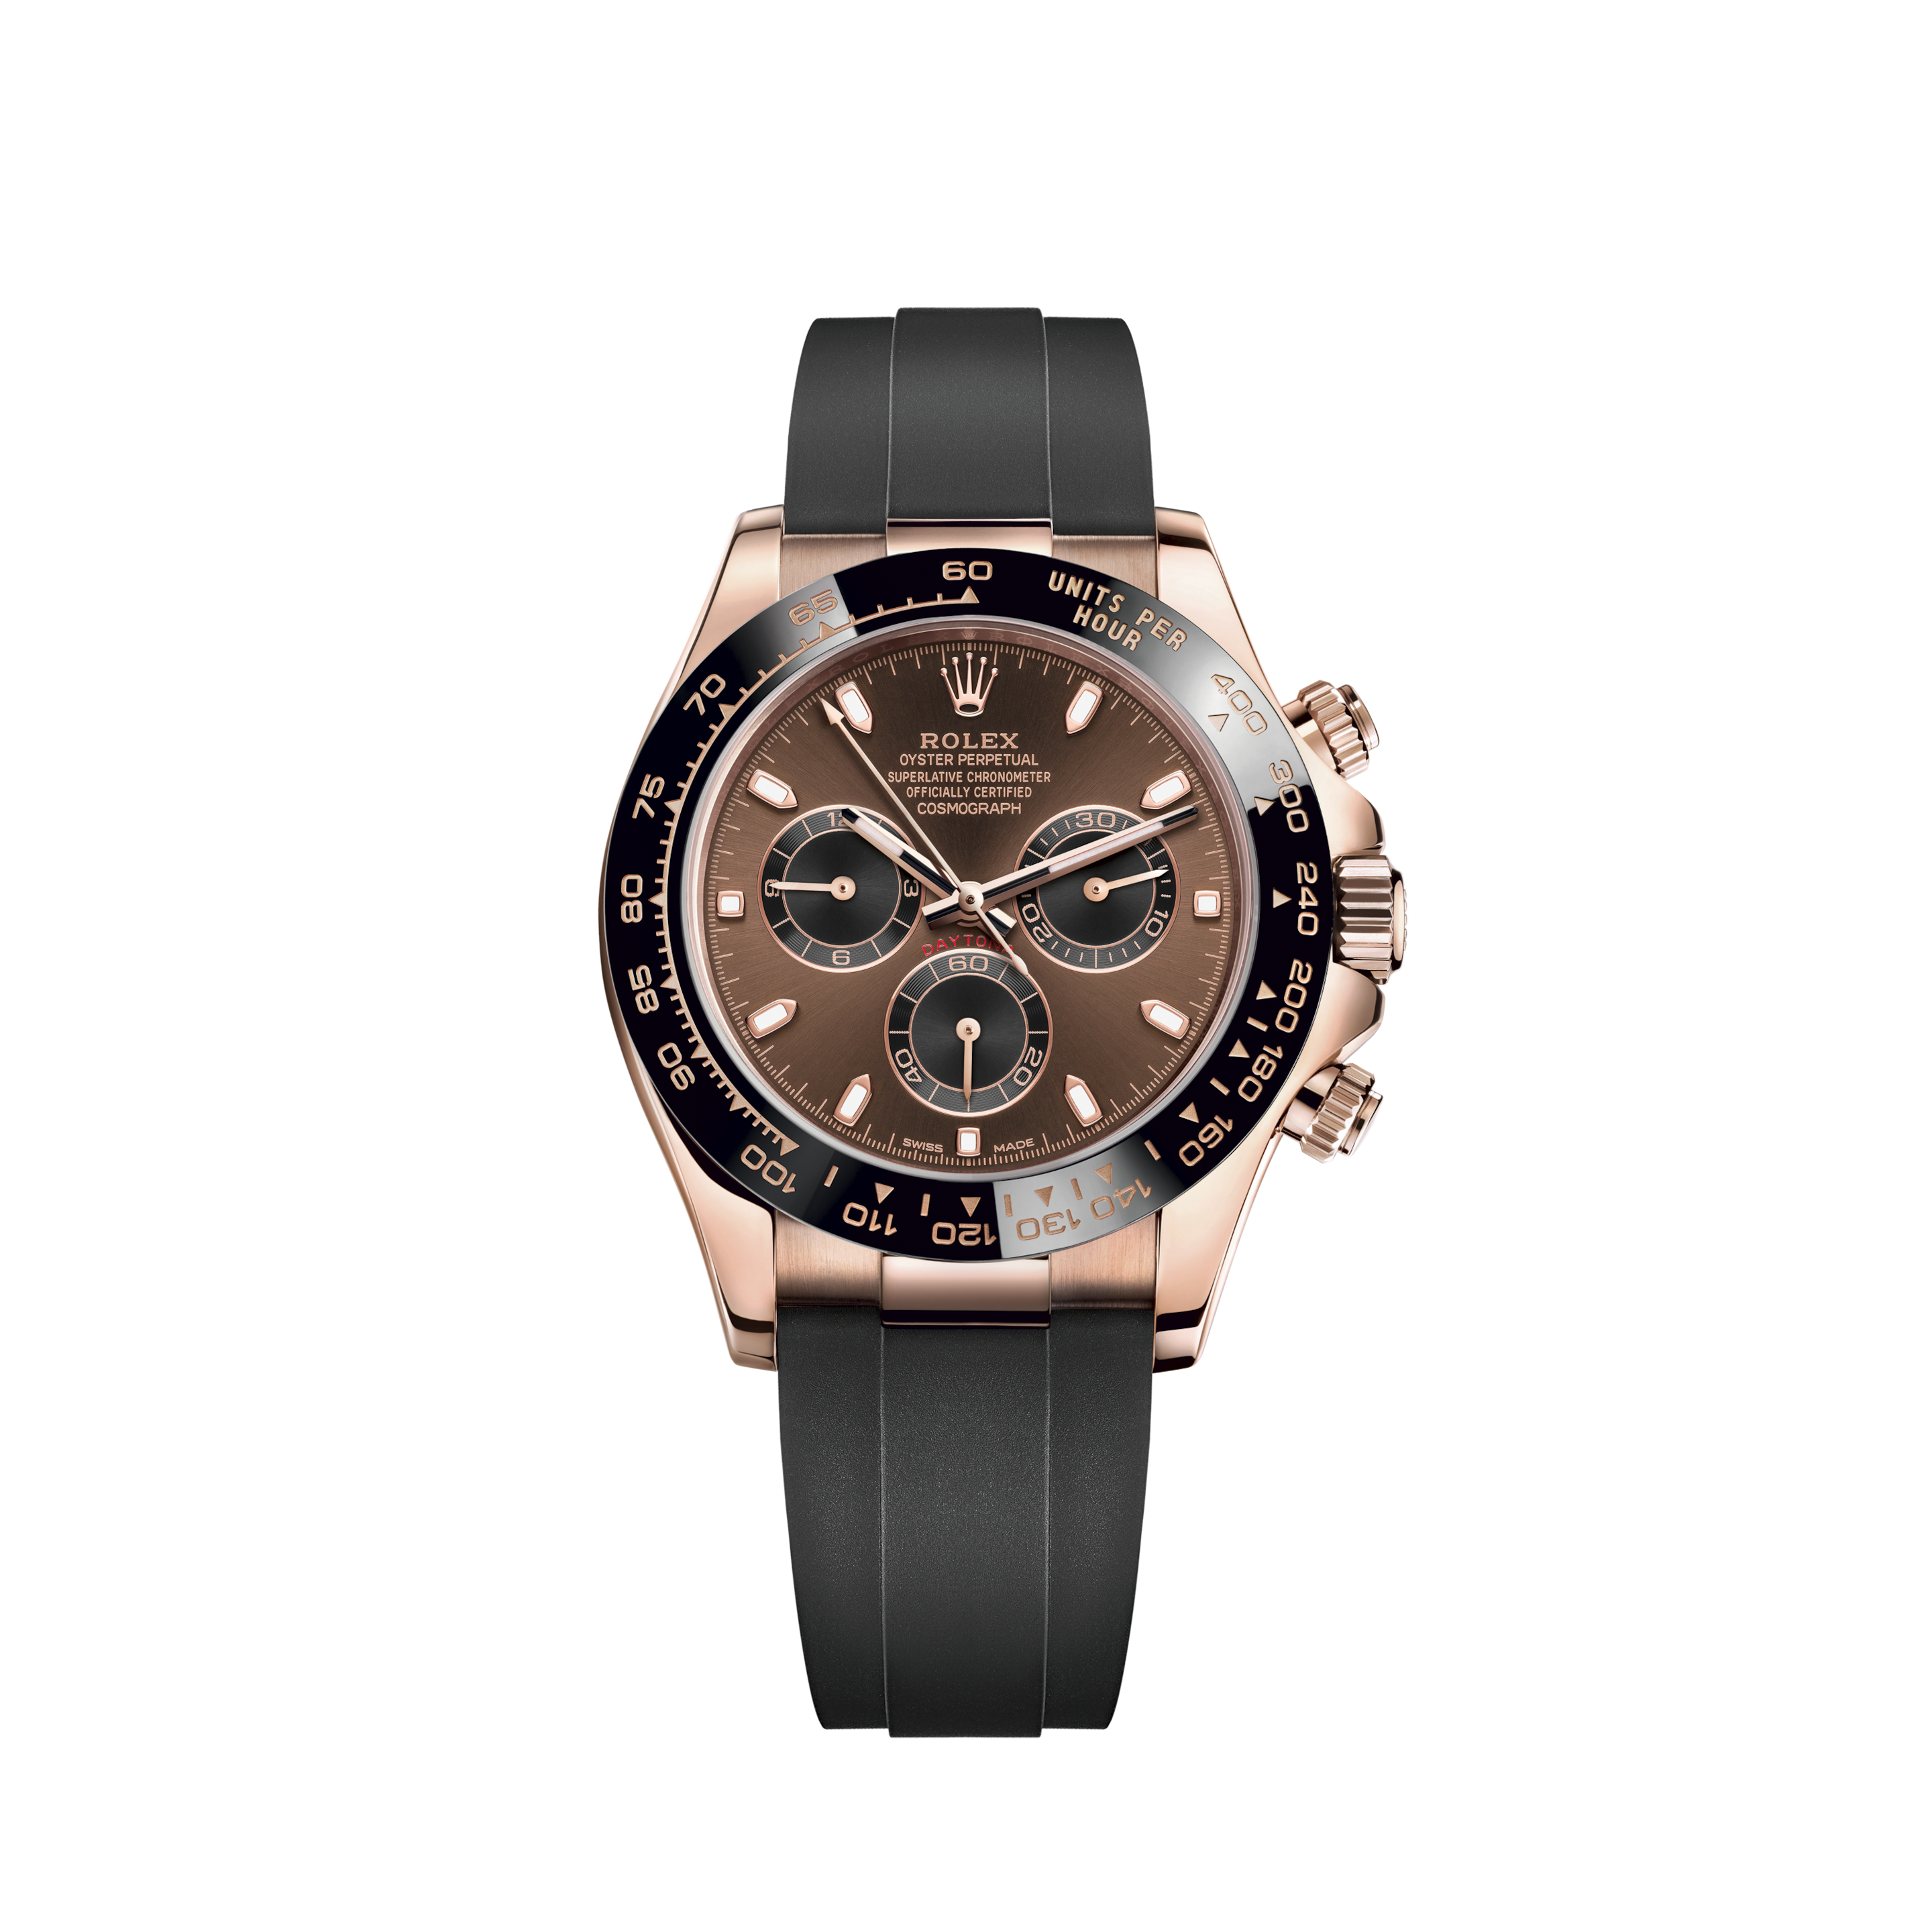 Rolex Datejust 36mm Steel Watch 2.85ct Diamond Bezel/Pave Case/Turquoise DialRolex Datejust 36mm Steel Watch 2.85ct Diamond Bezel/Pave Case/White Pearl Dial